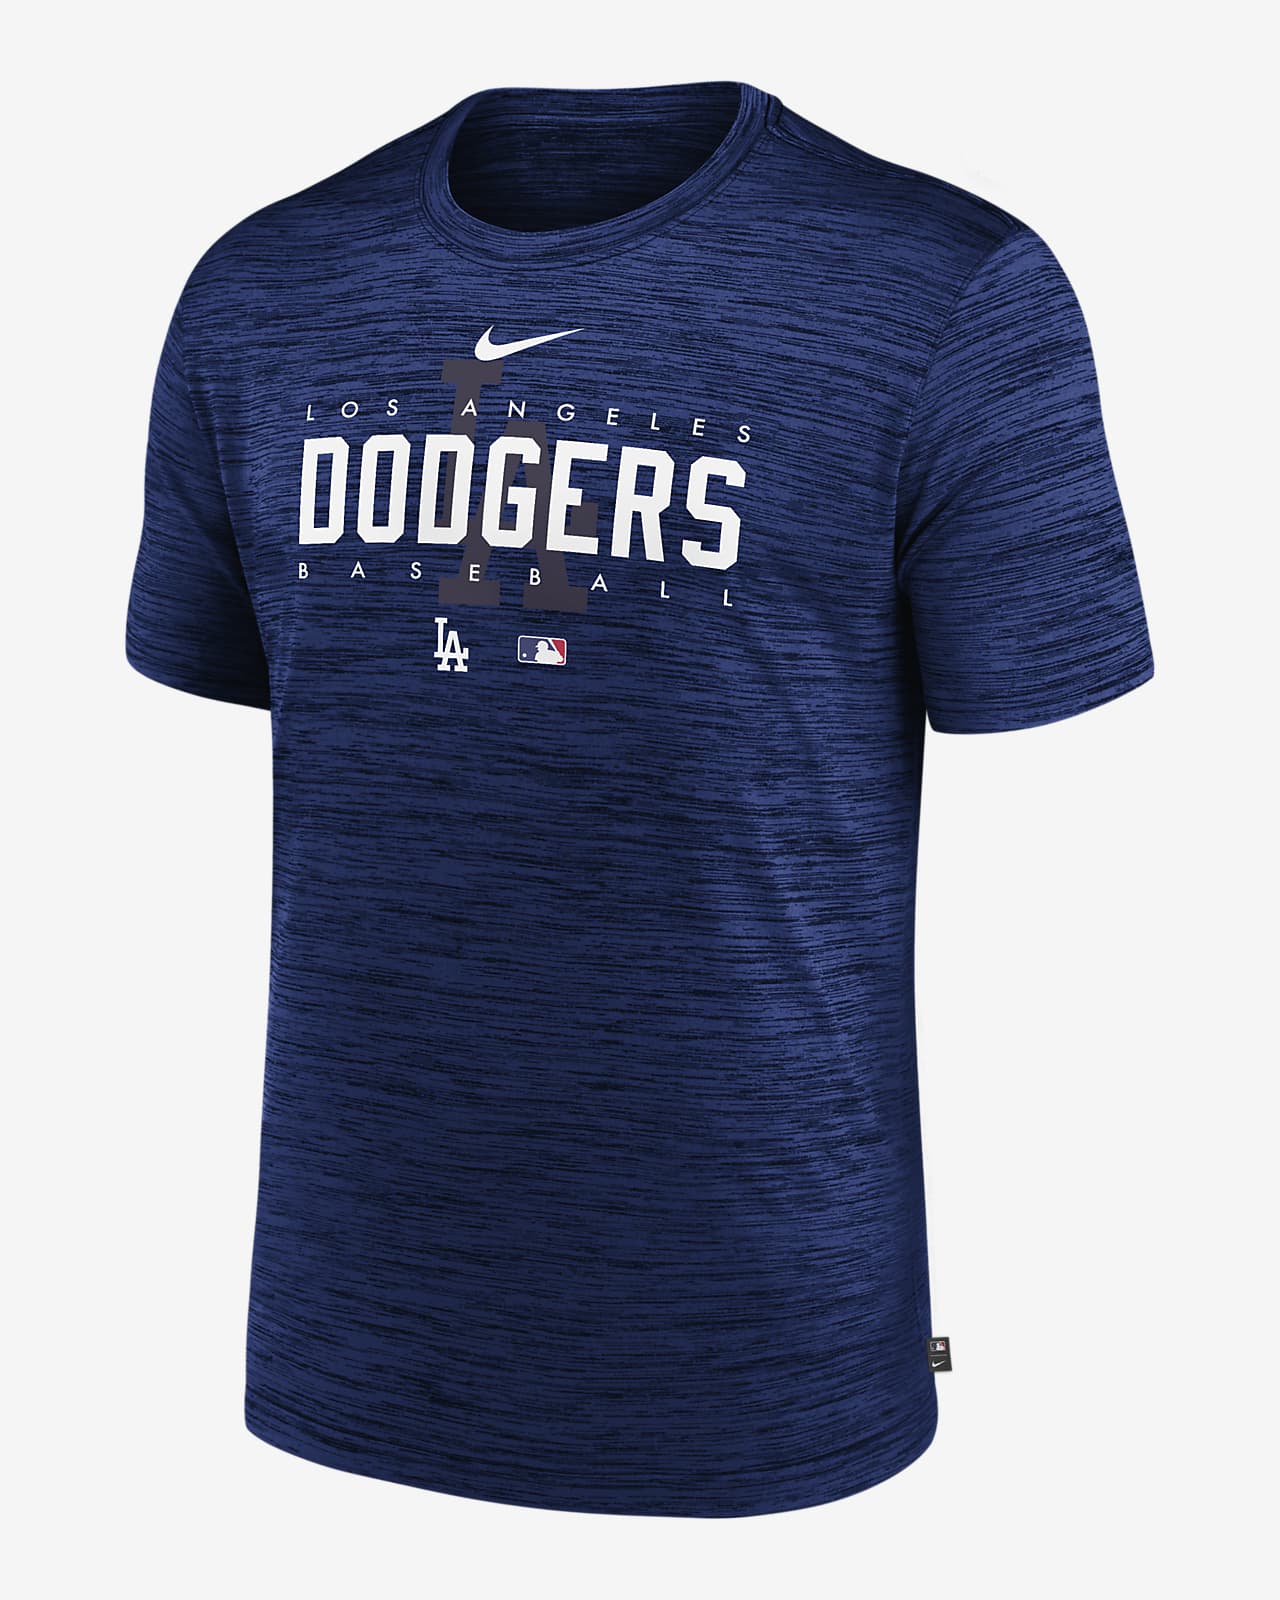 MLB Los Angeles Dodgers Boys' T-Shirt - XS